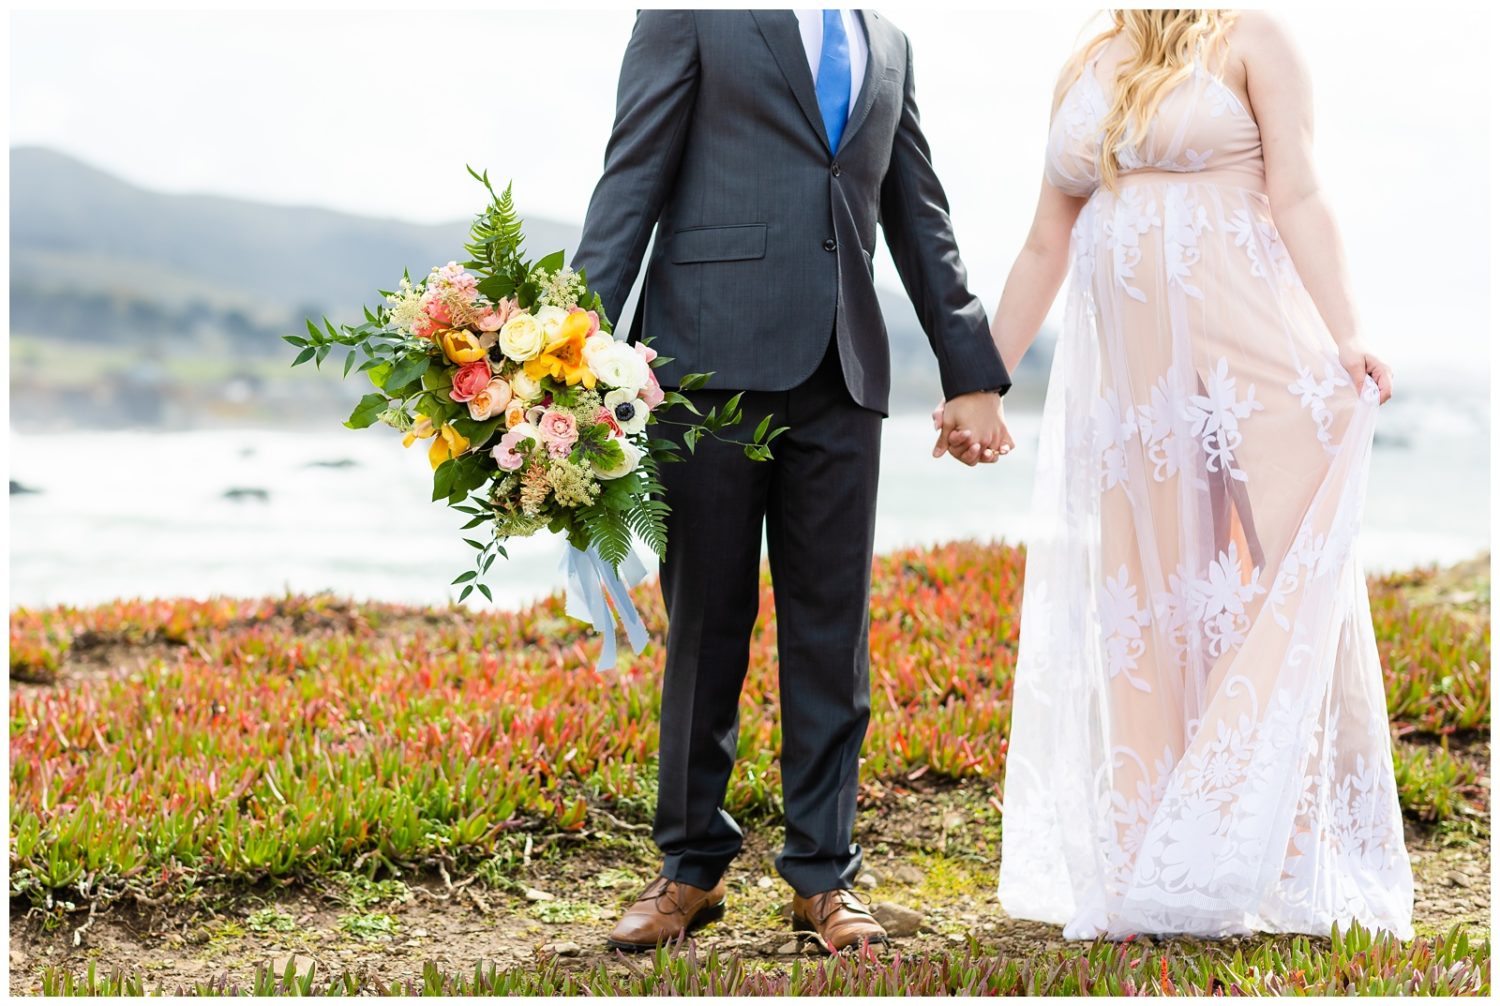 Bodega Bay California Elopement Wedding Photos Duncan's Landing Overlook